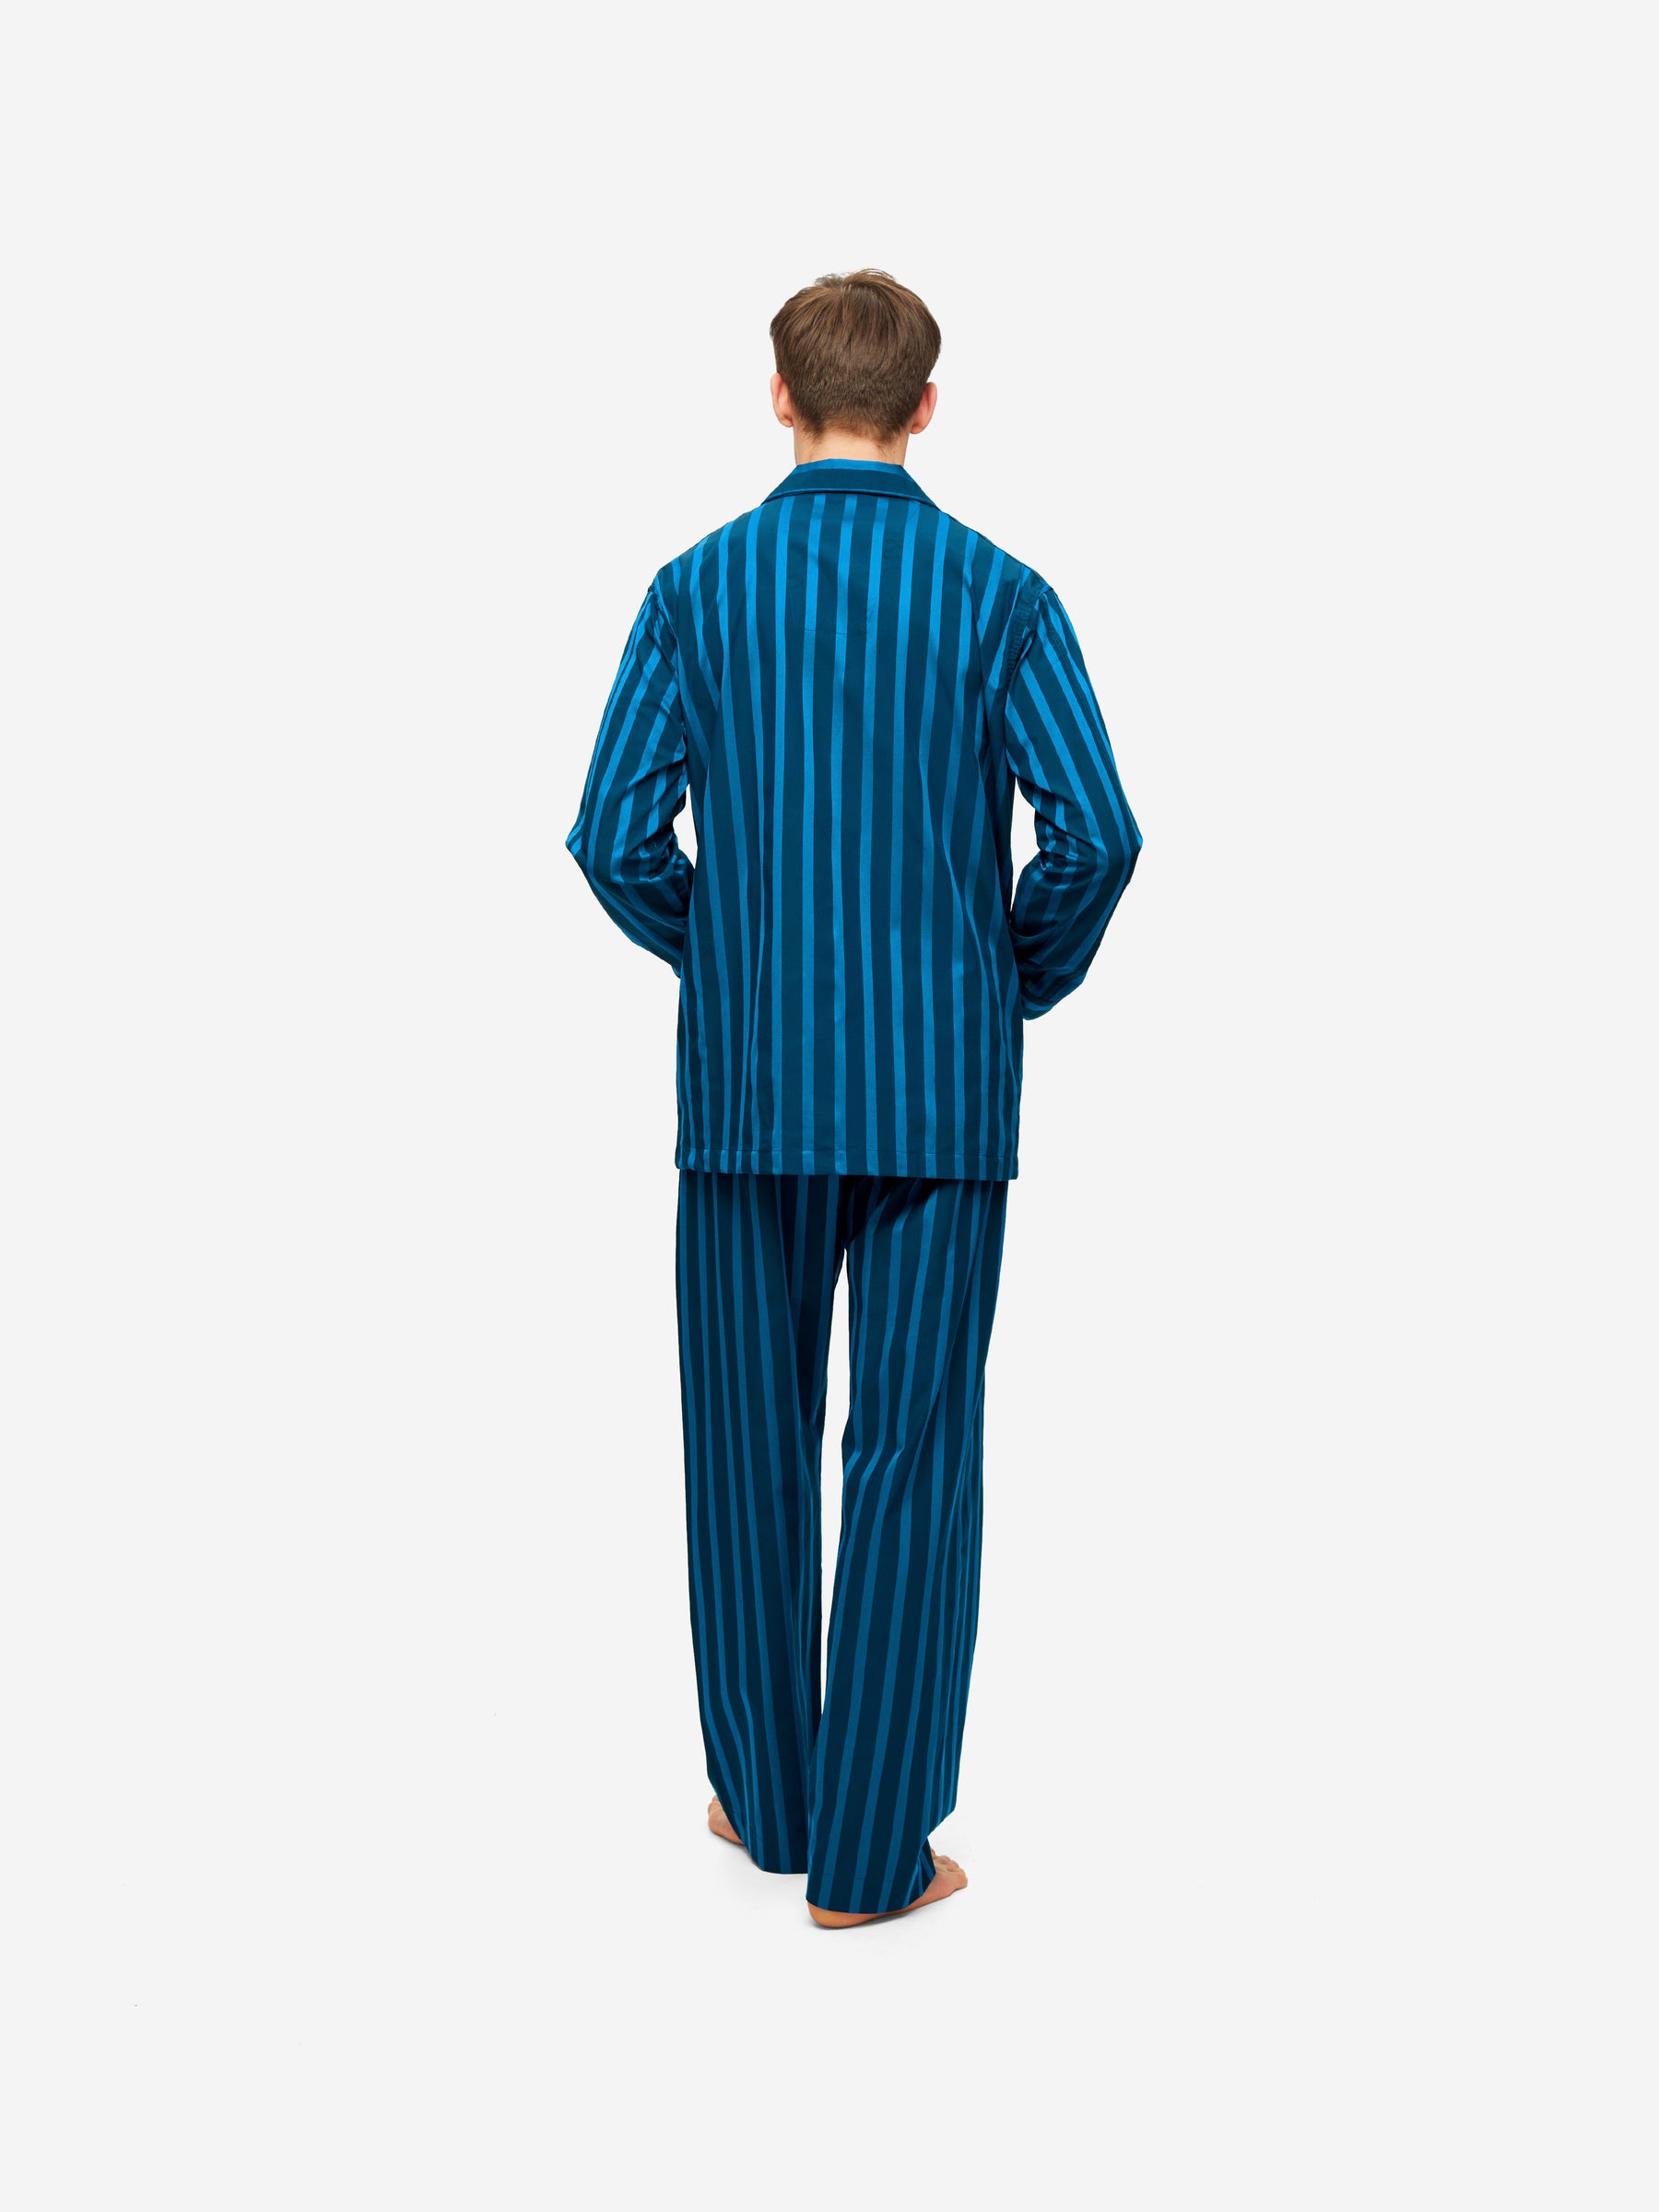 Men's Classic Fit Pyjamas Royal 218 Cotton Navy